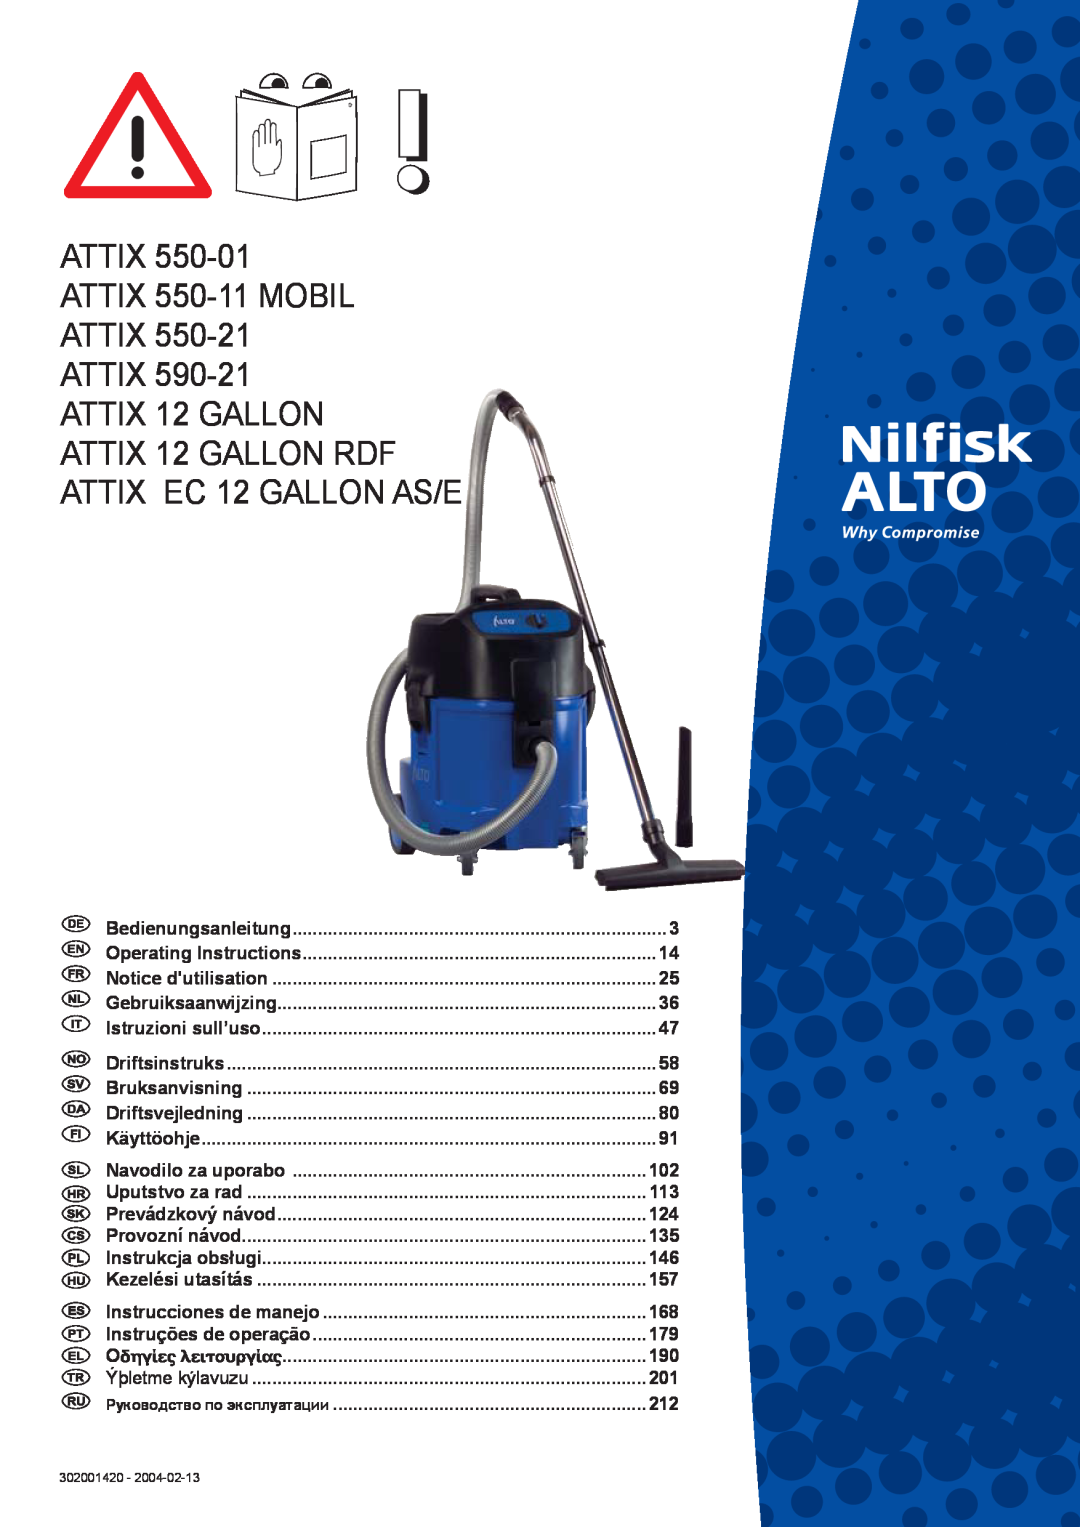 Nilfisk-ALTO 550-11 Mobil, 550-01, 550-21 manual ATTIX ATTIX 550-11MOBIL ATTIX ATTIX, ATTIX 12 GALLON ATTIX 12 GALLON RDF 